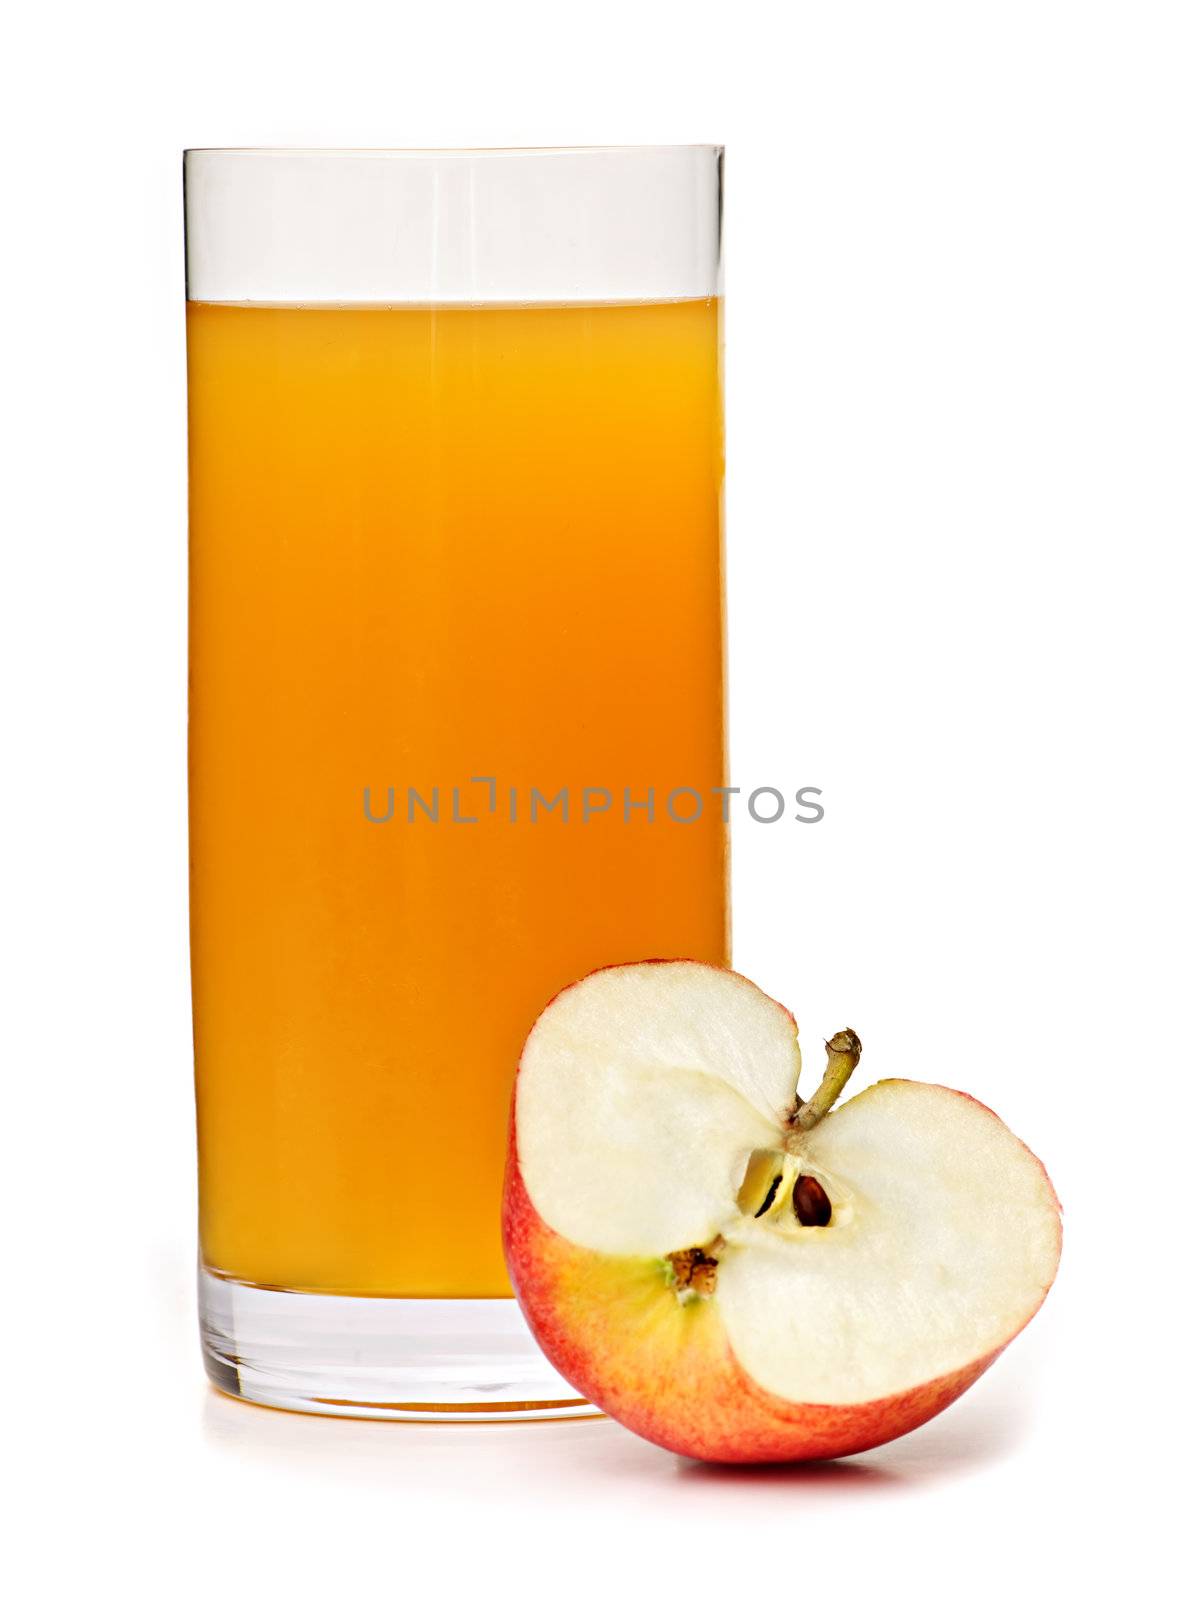 Apple juice in glass by elenathewise